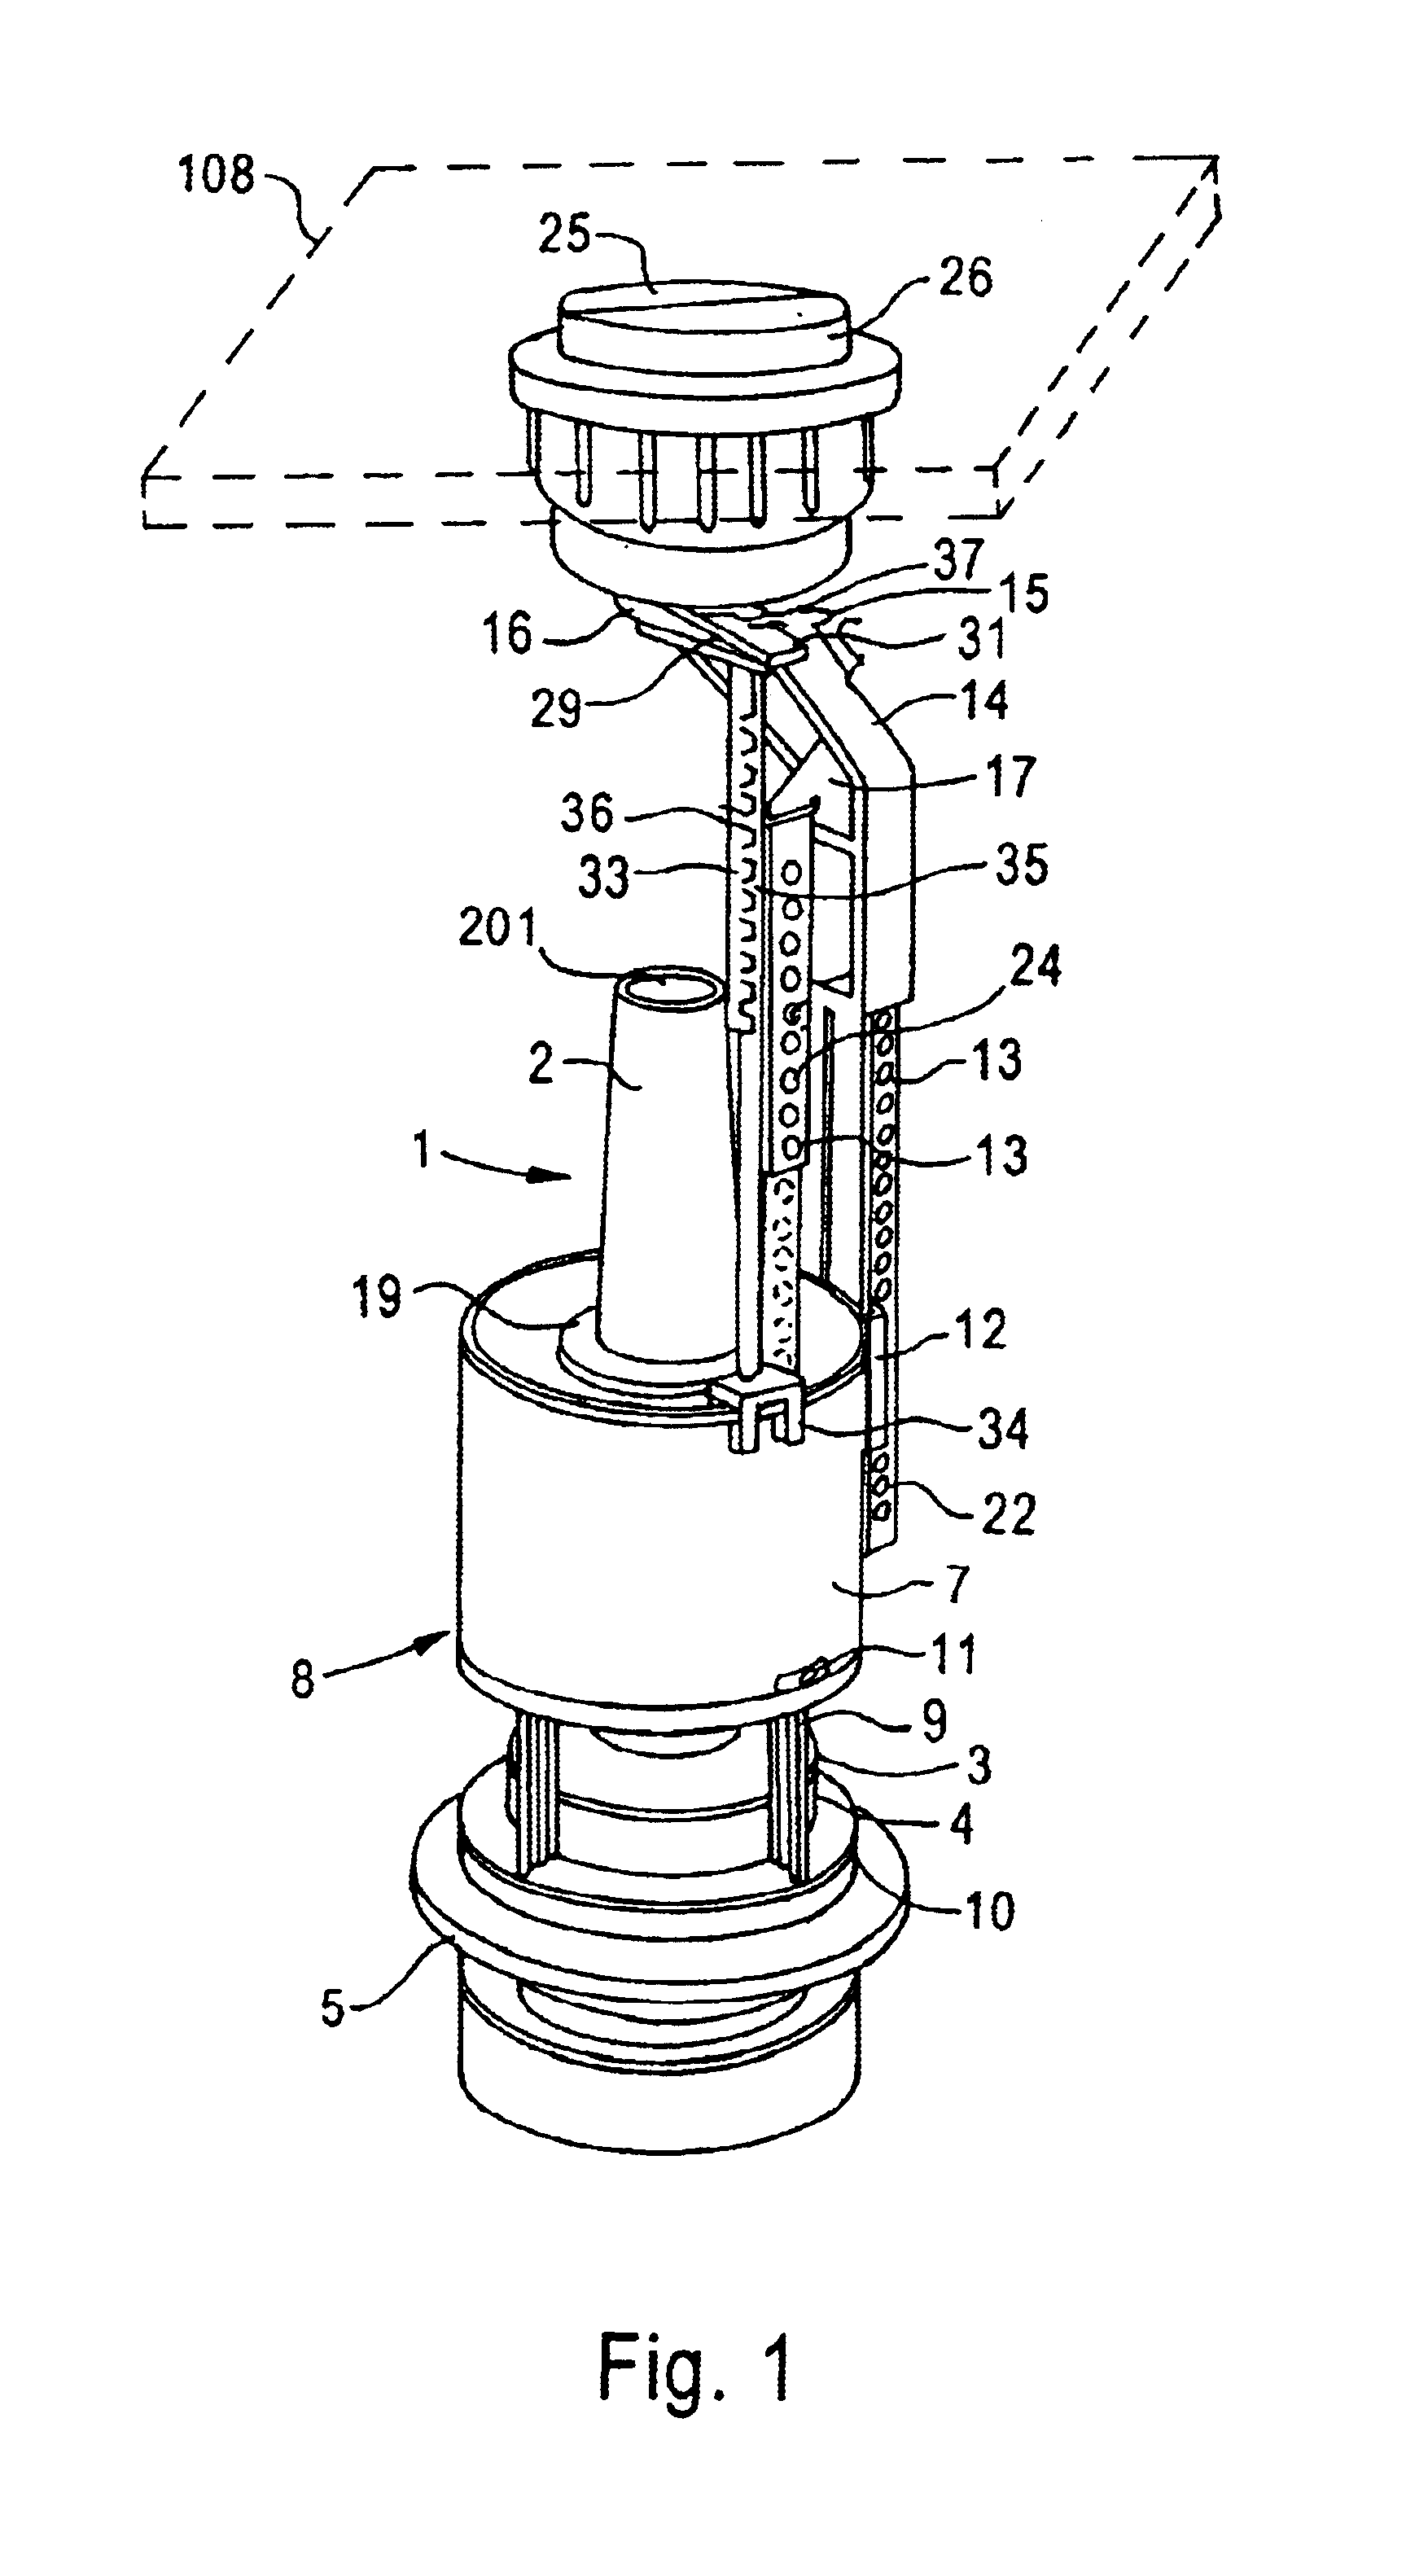 Flushing mechanism for a dual flush cistern